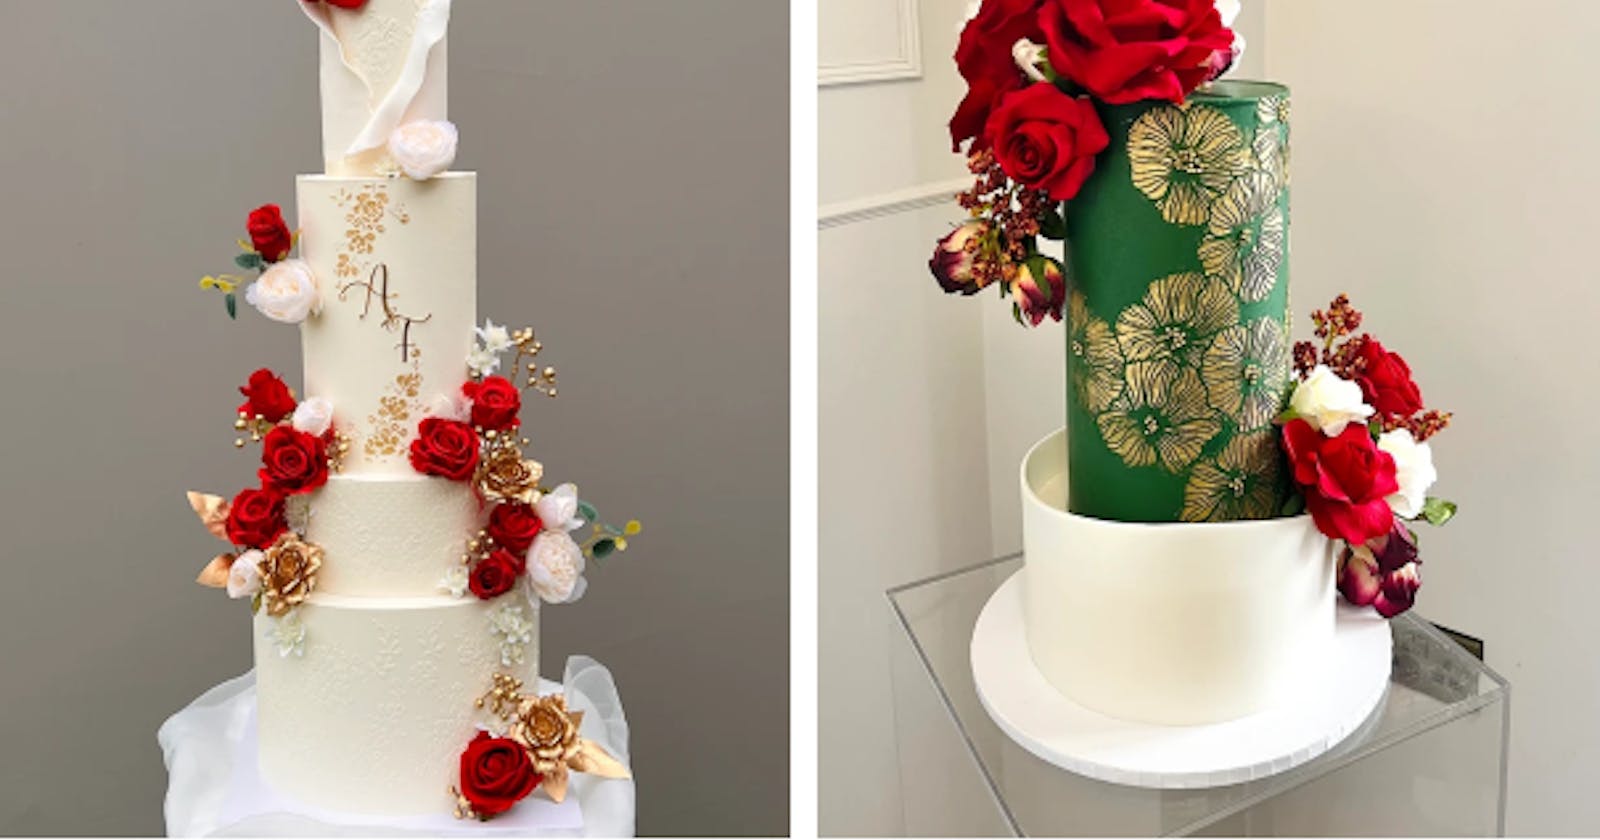 One Cake Street: Creating Memorable Wedding Cakes in Wednesbury